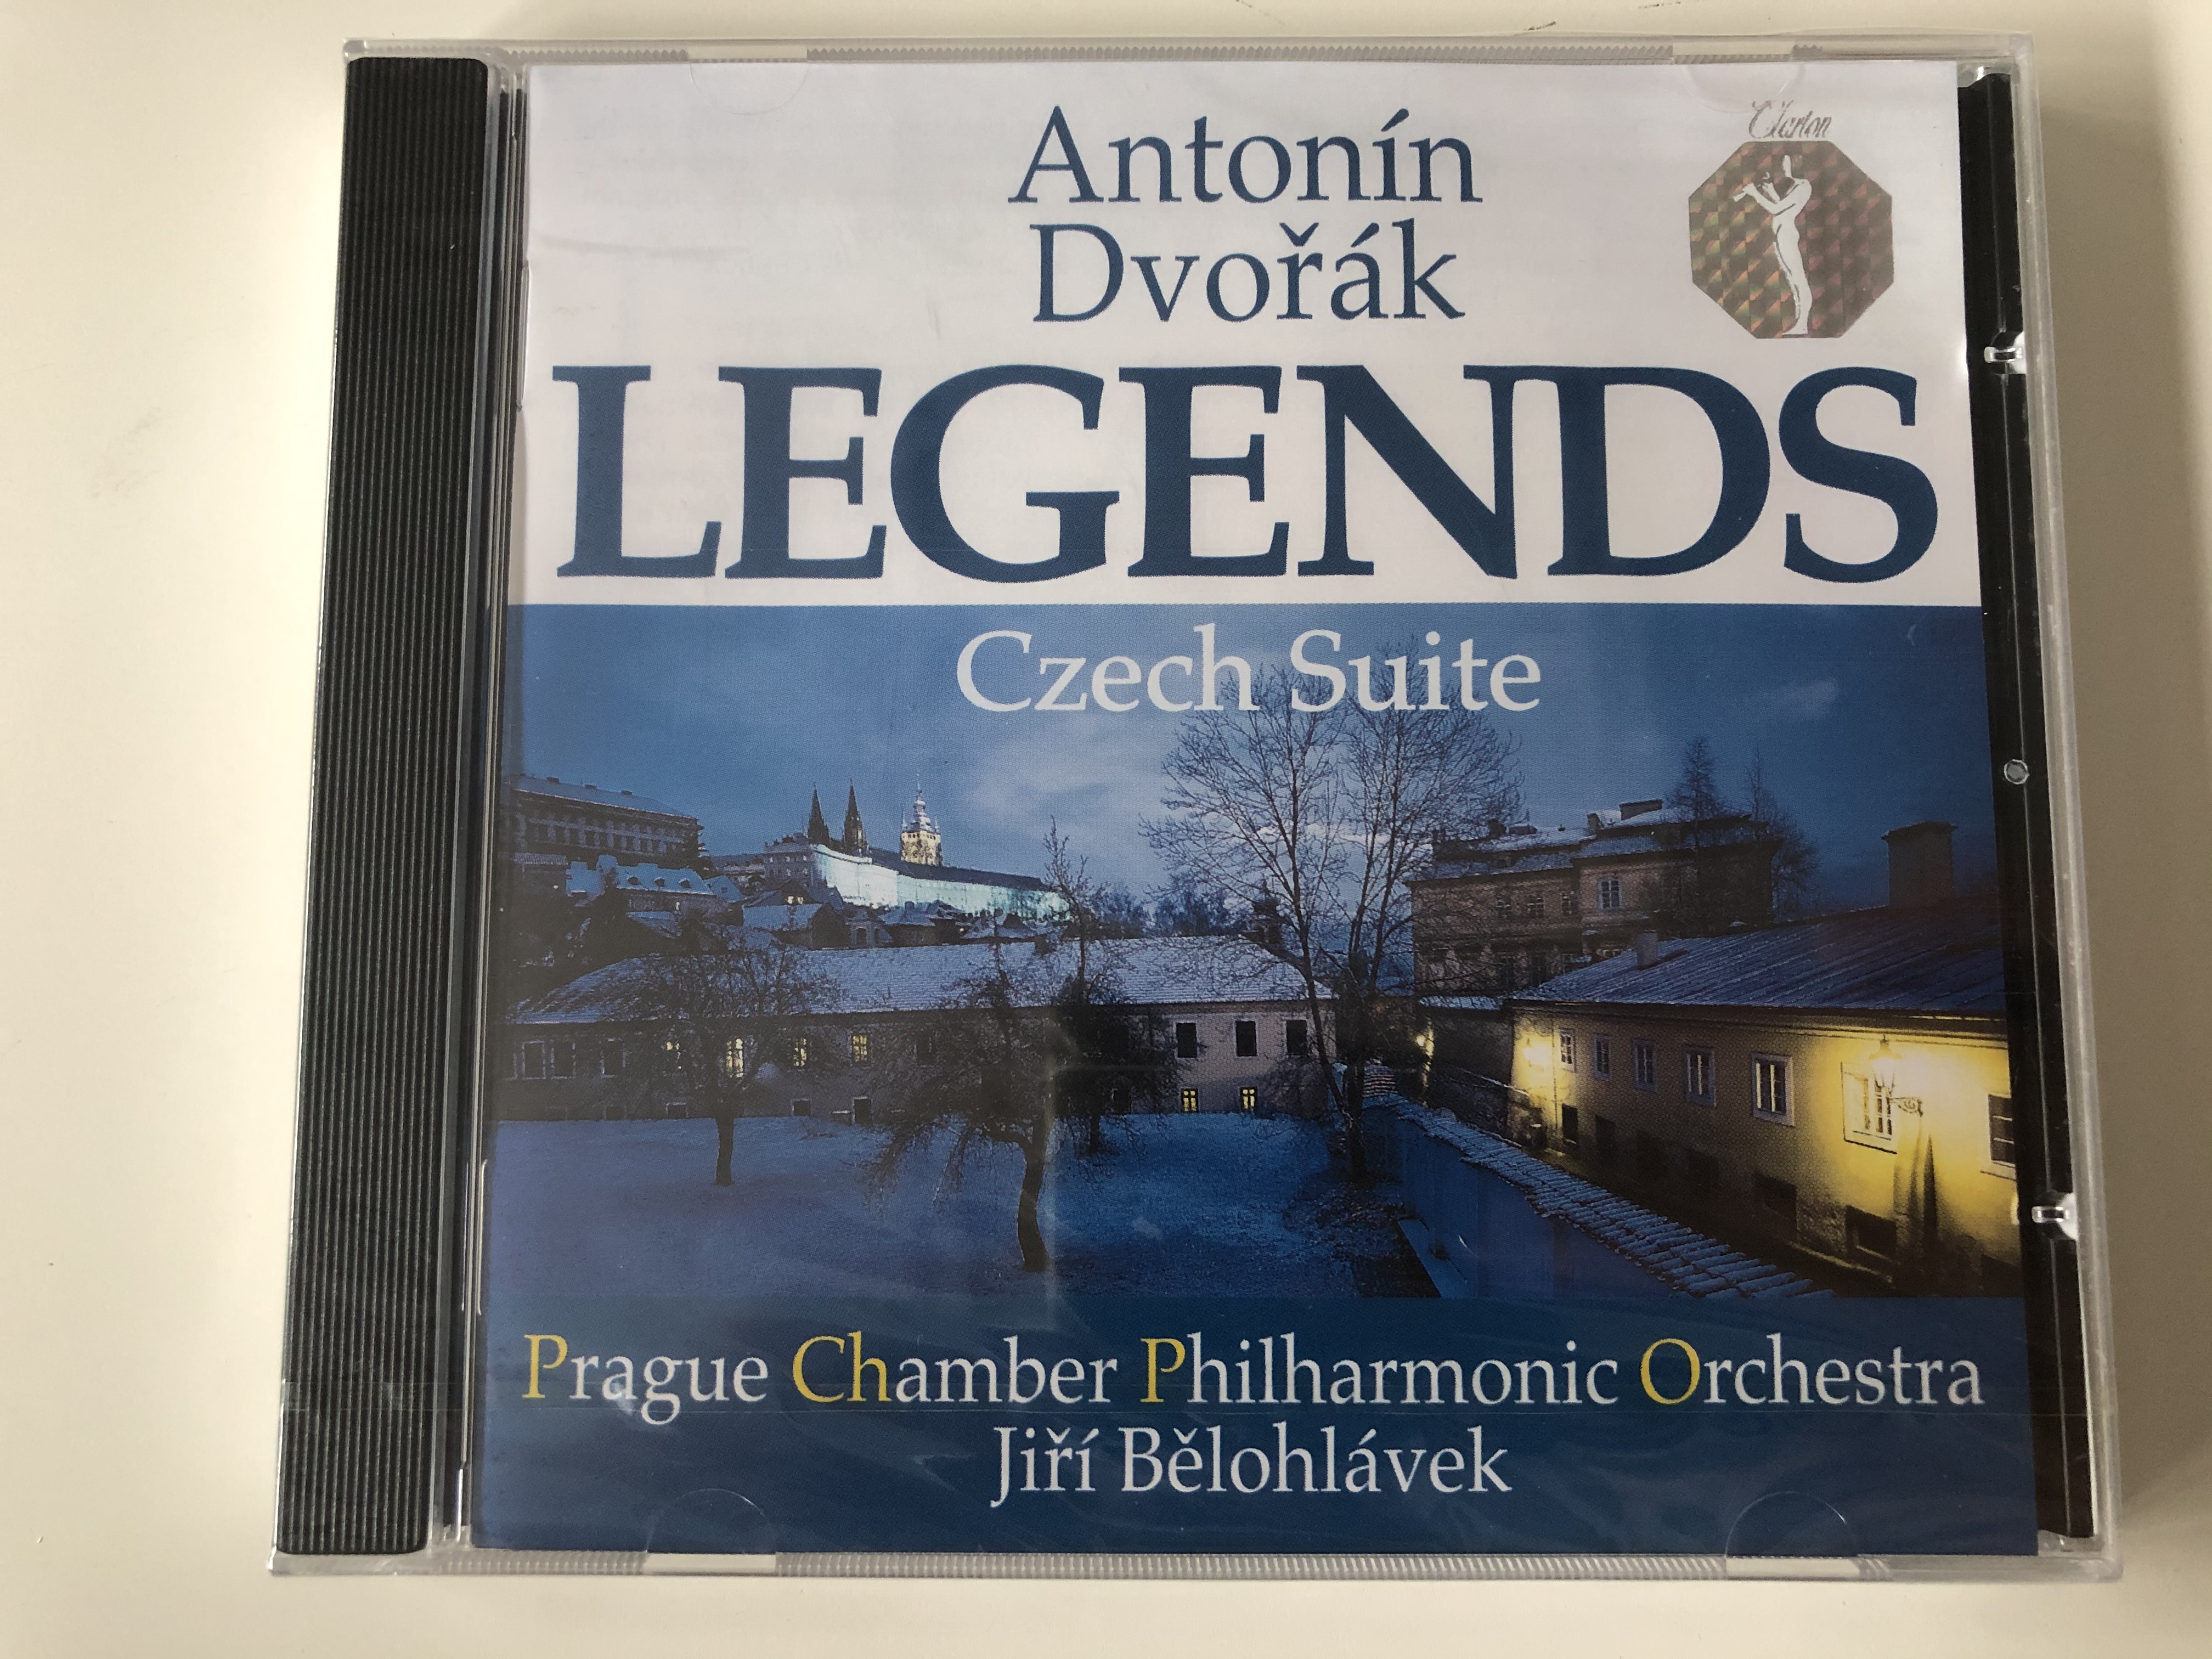 anton-n-dvo-k-legends-czech-suite-prague-chamber-philharmonic-orchestra-jiri-belohlavek-clarton-audio-cd-1996-cq-0027-2-031-1-.jpg